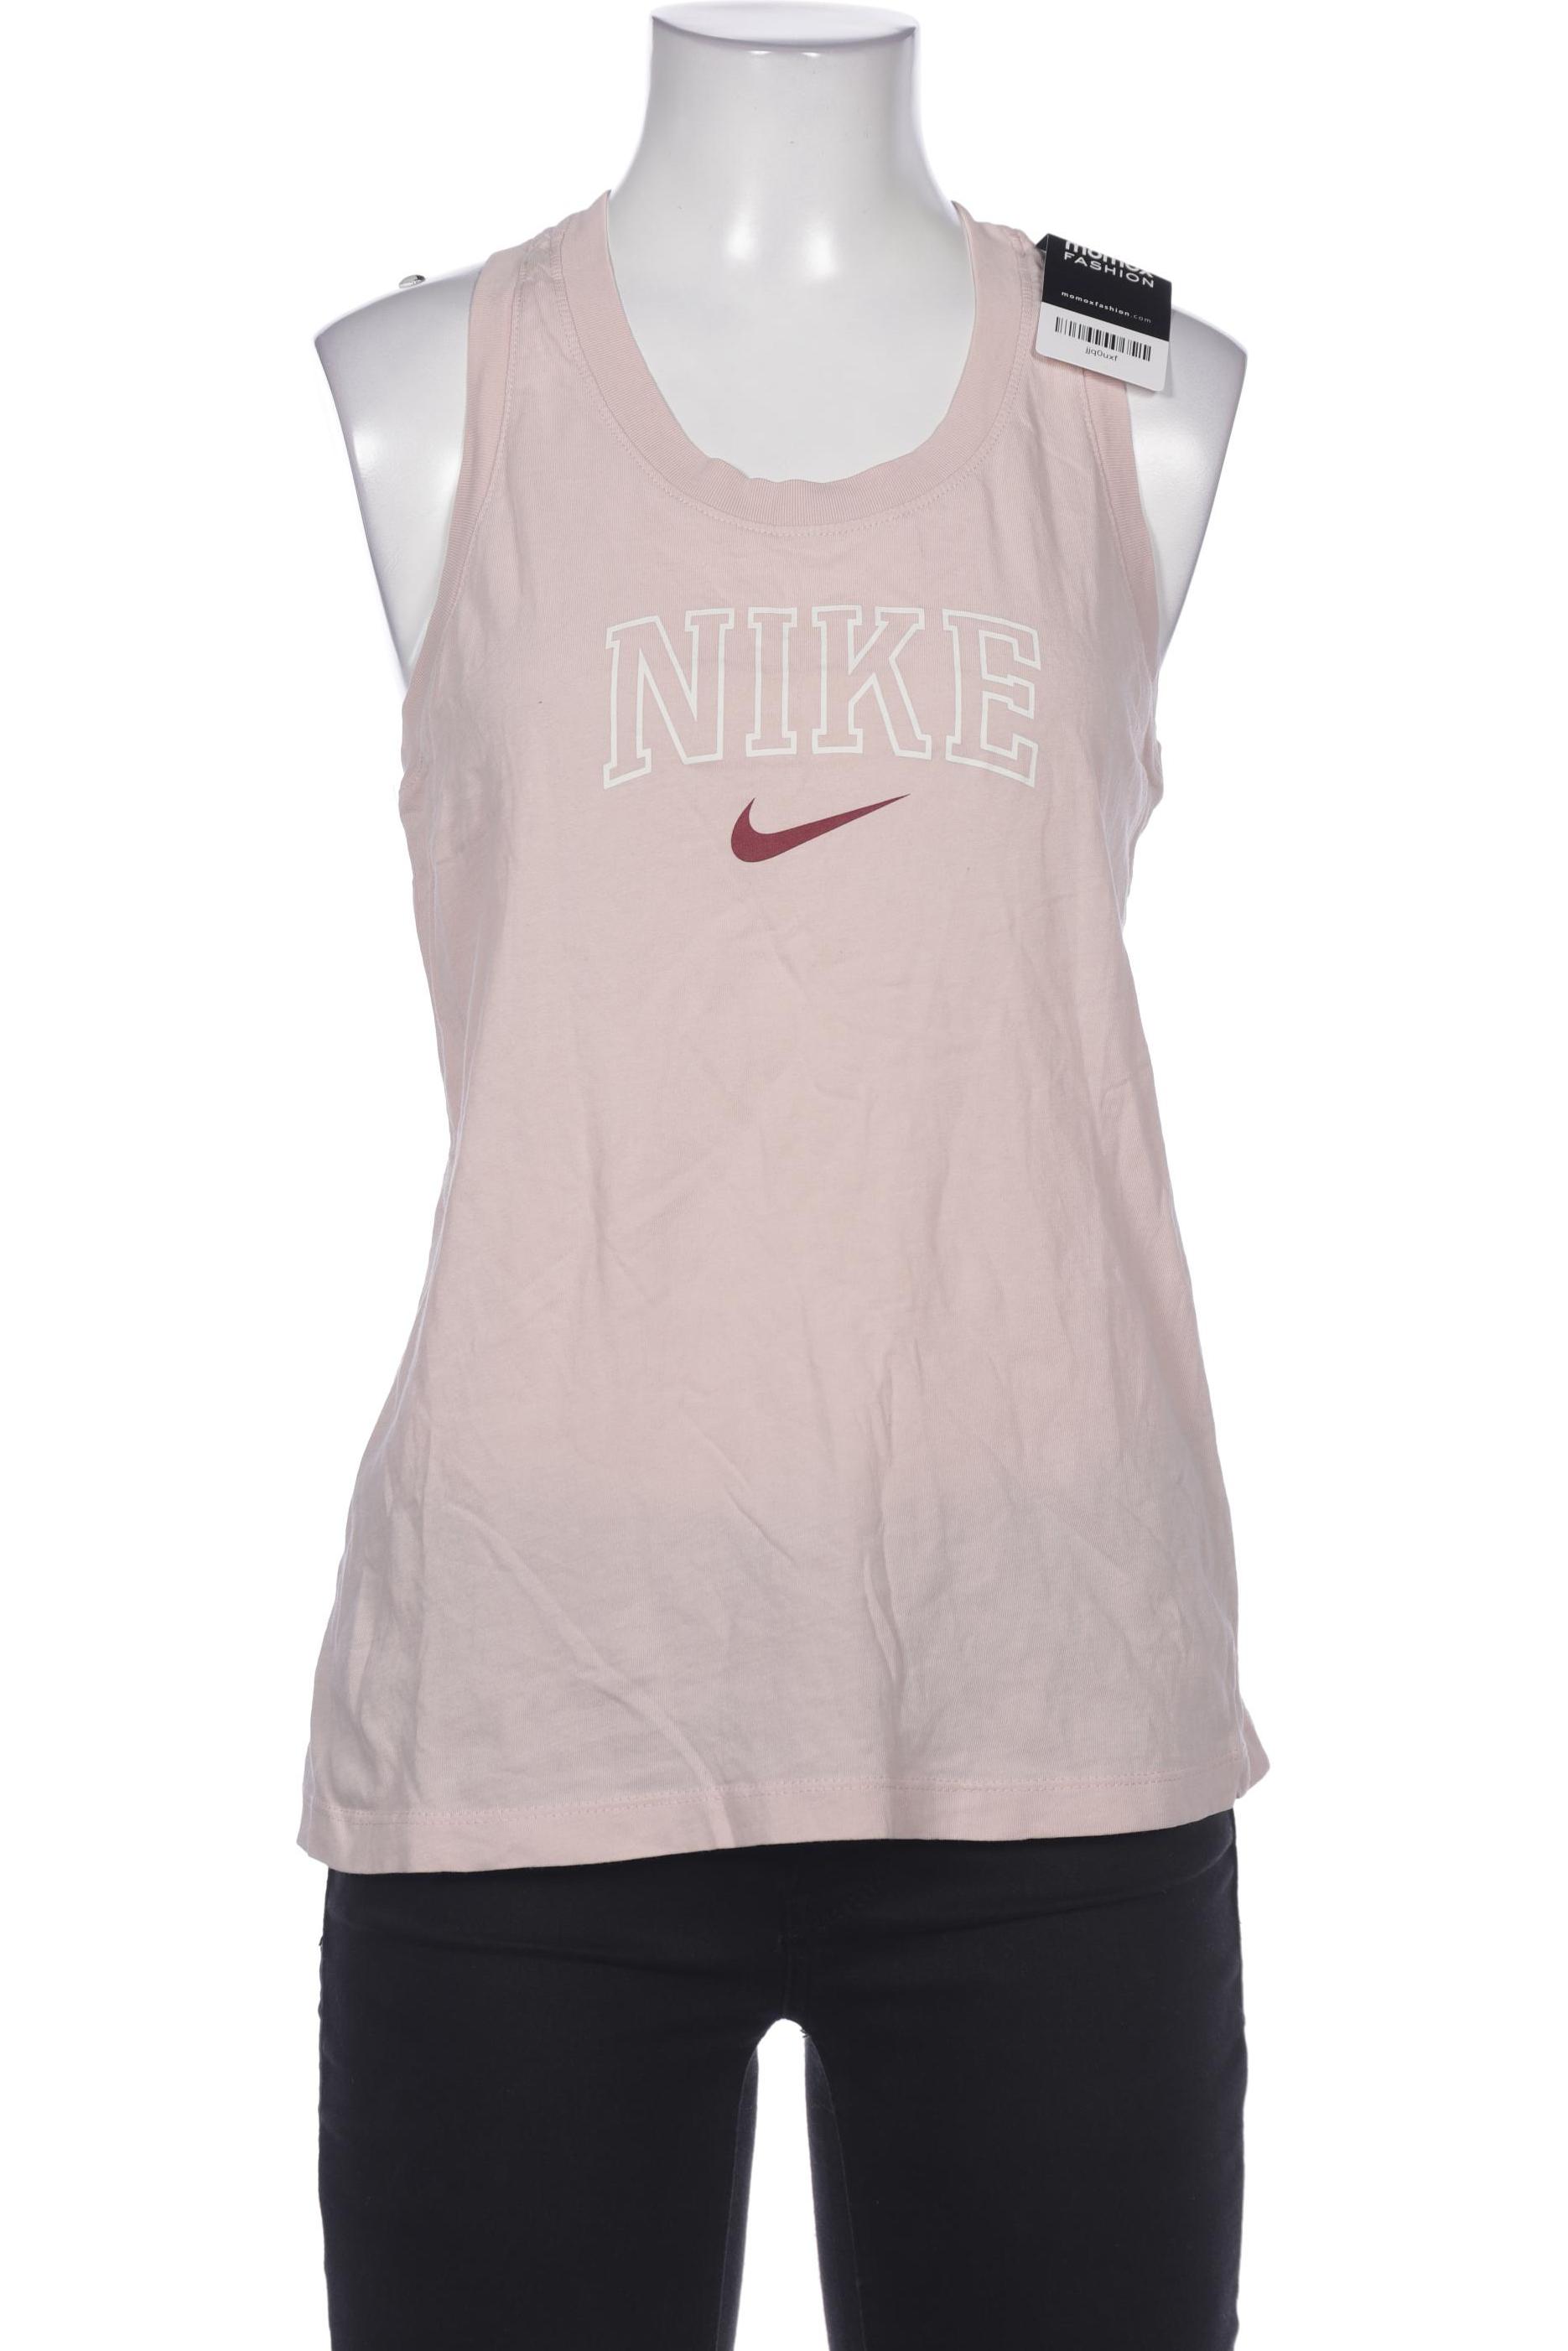 Nike Damen Top, pink von Nike